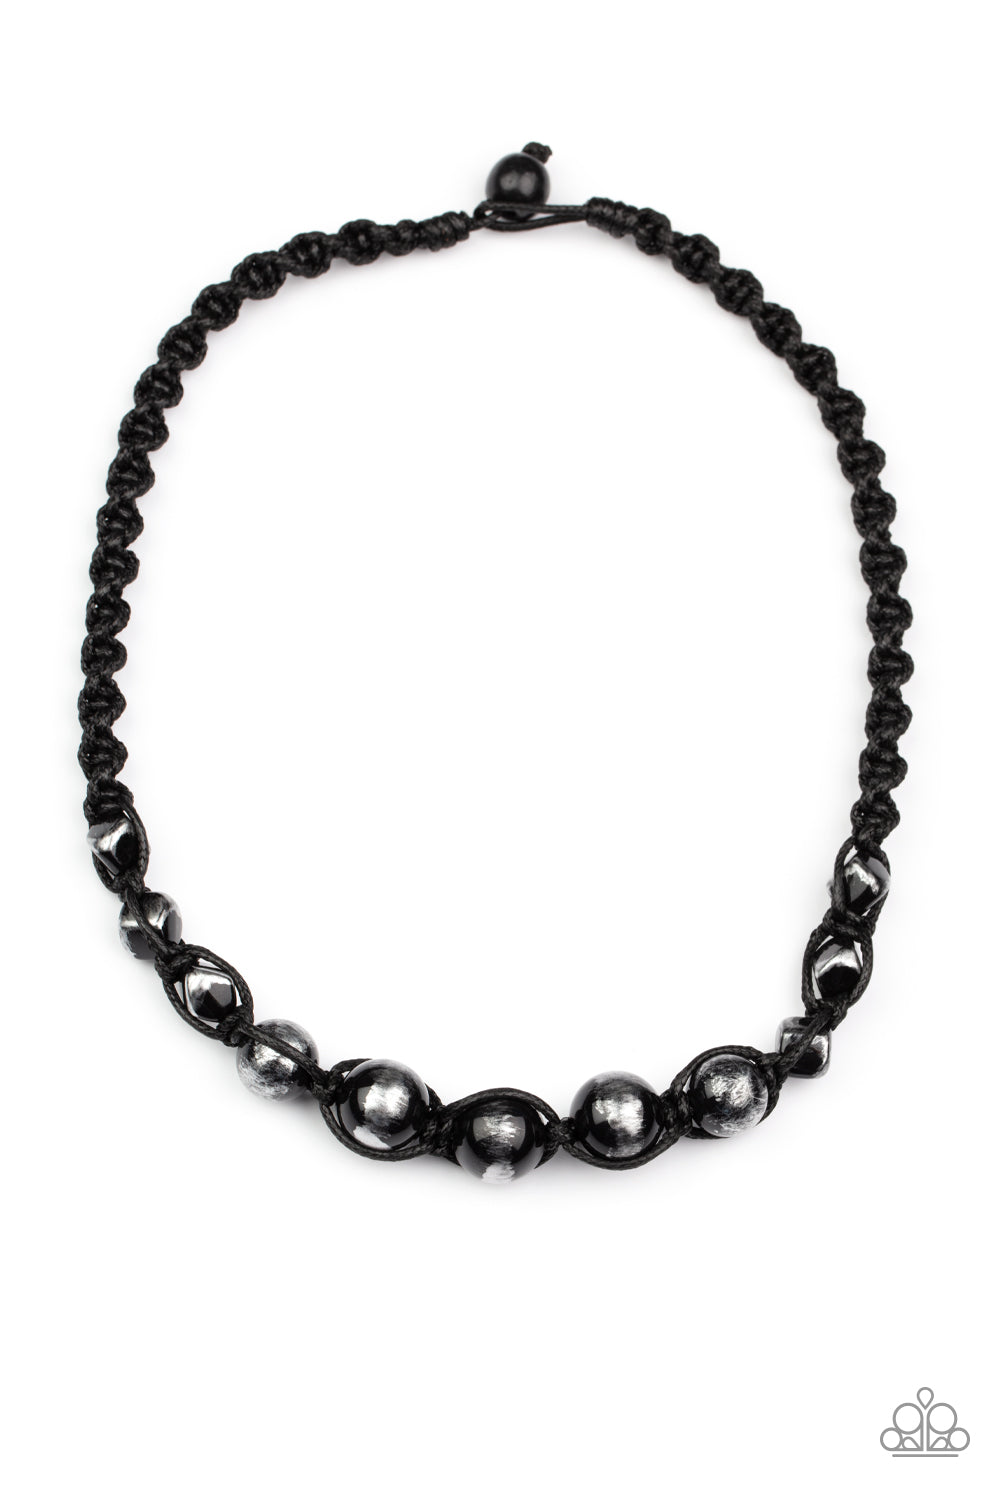 Loose Cannon - Black Necklace